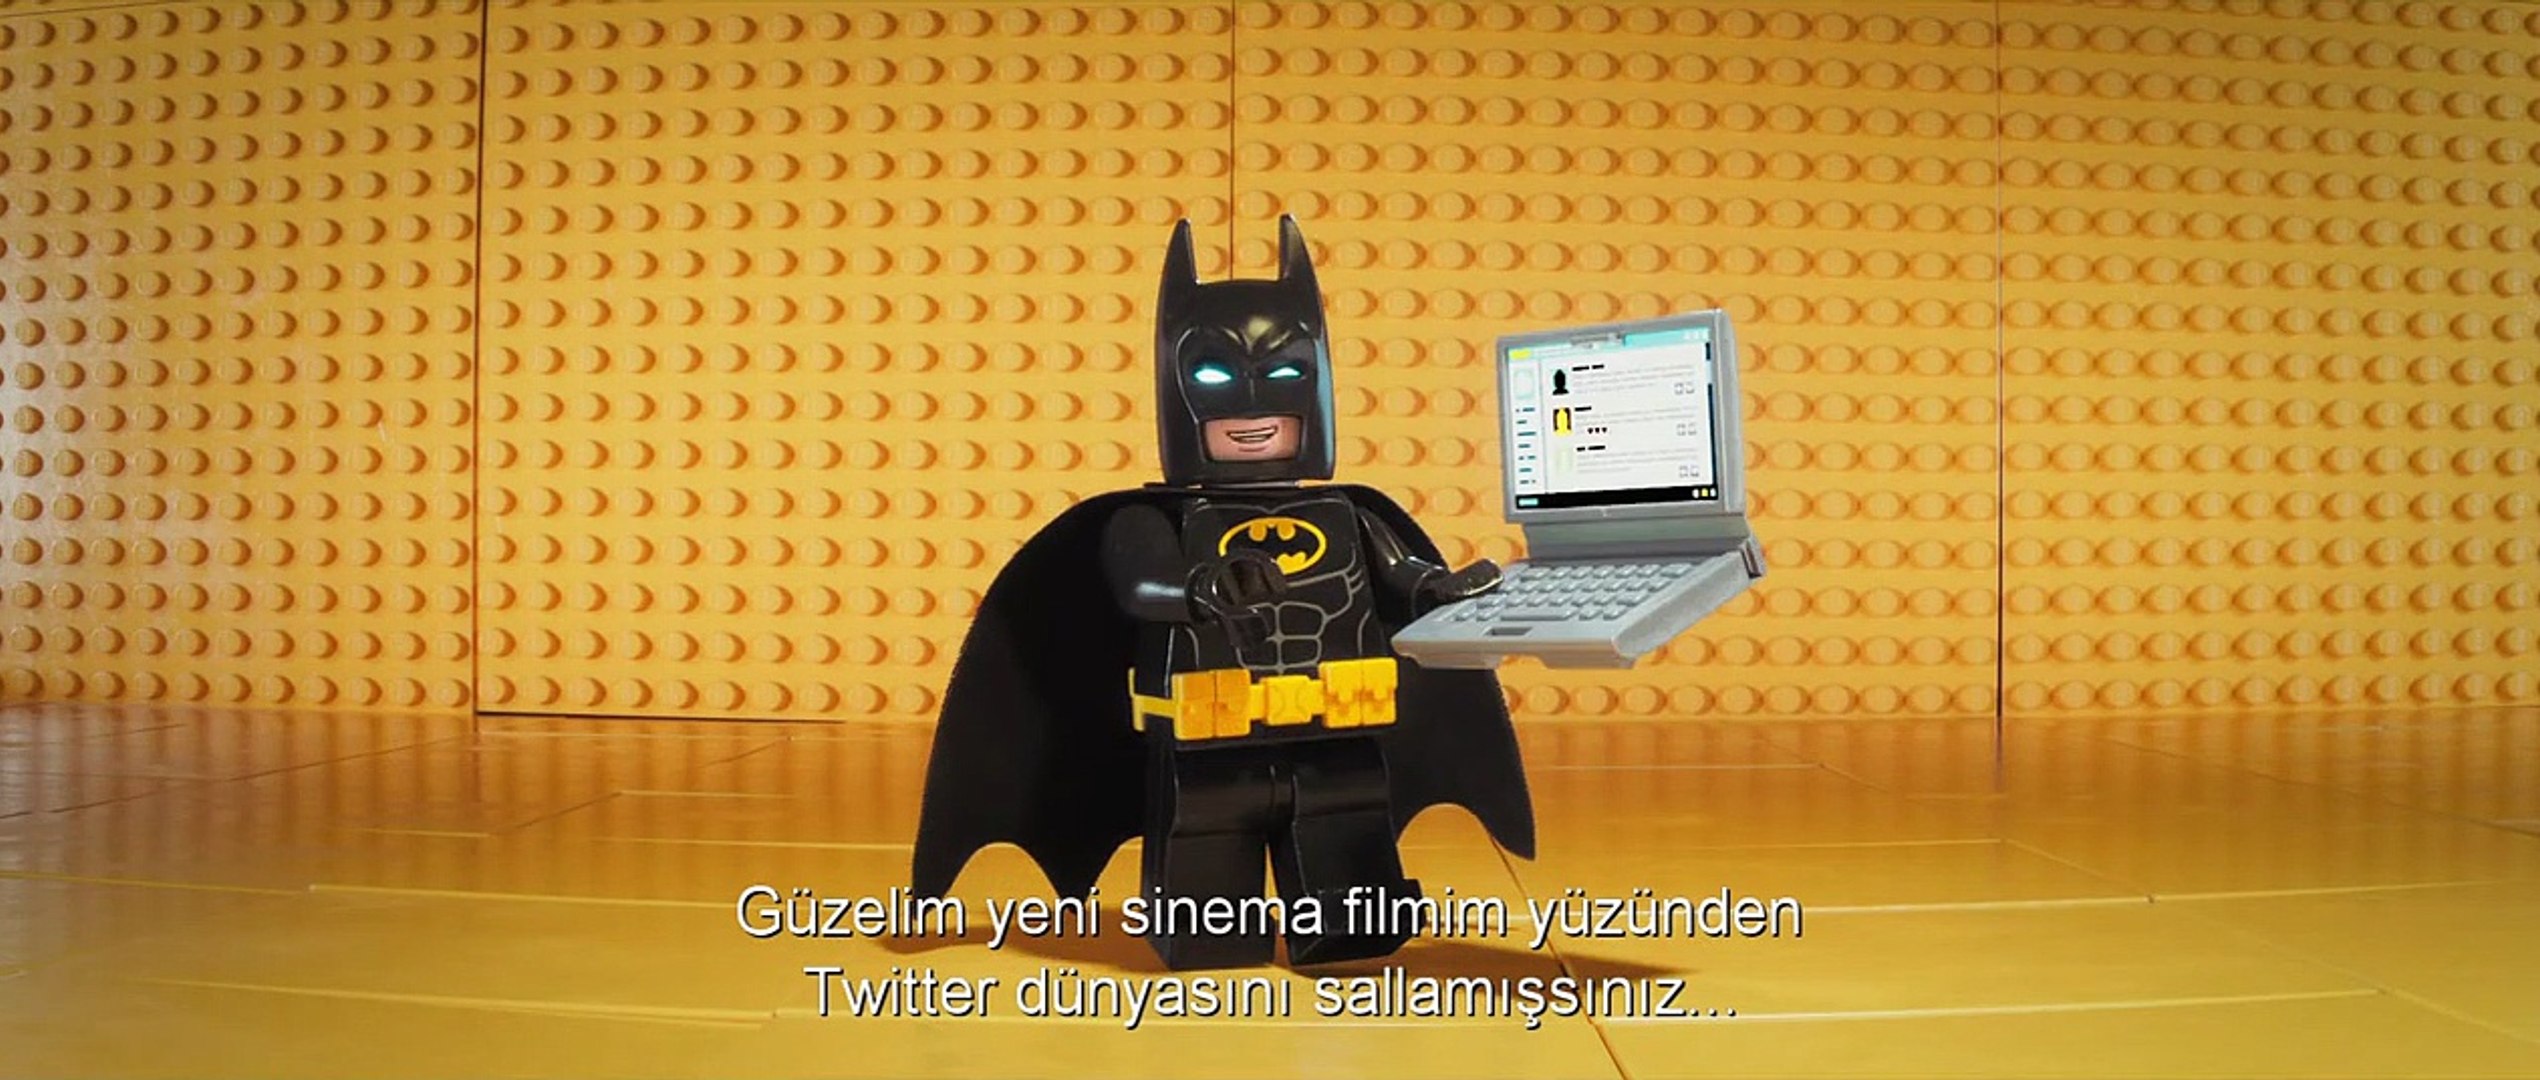 Lego Batman Filmi - Altyazılı Teaser - Dailymotion Video